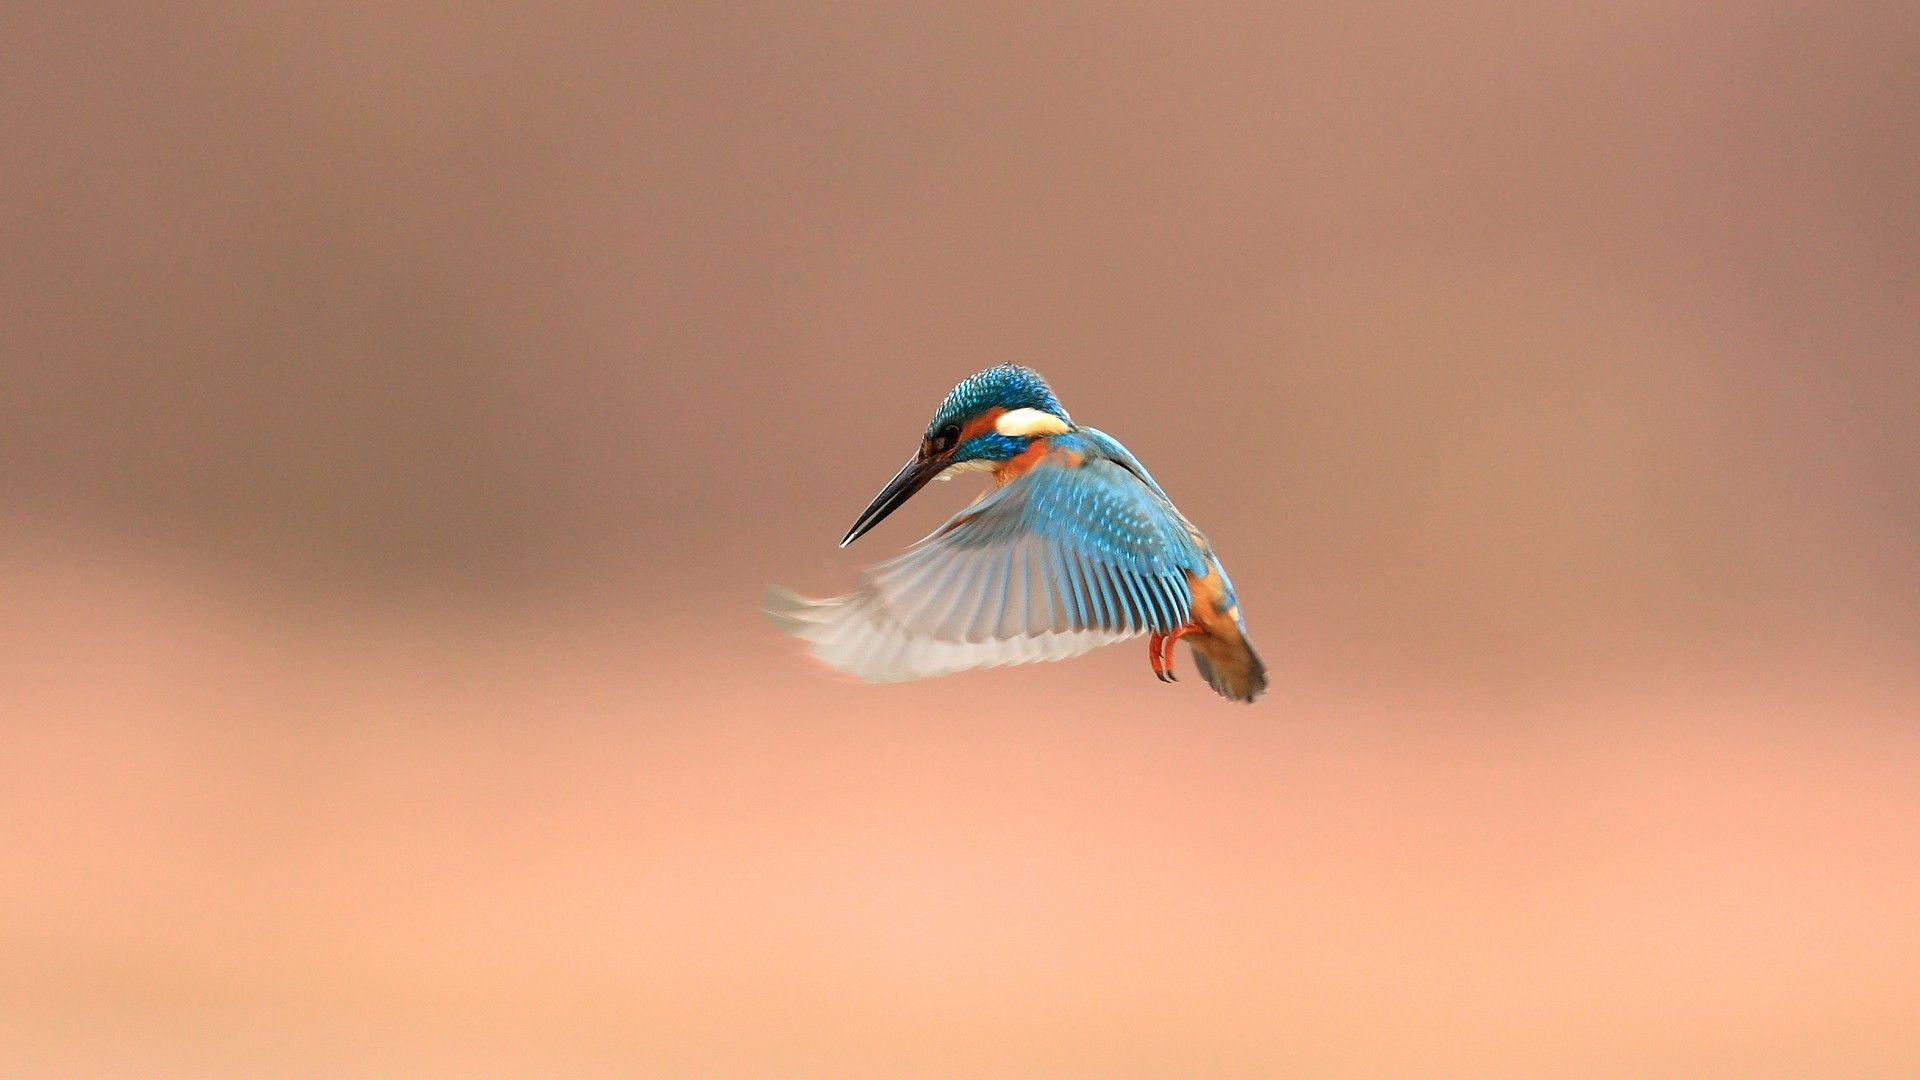 Kingfisher Bird HD Wallpaper | Kingfisher Bird Images | Cool ...